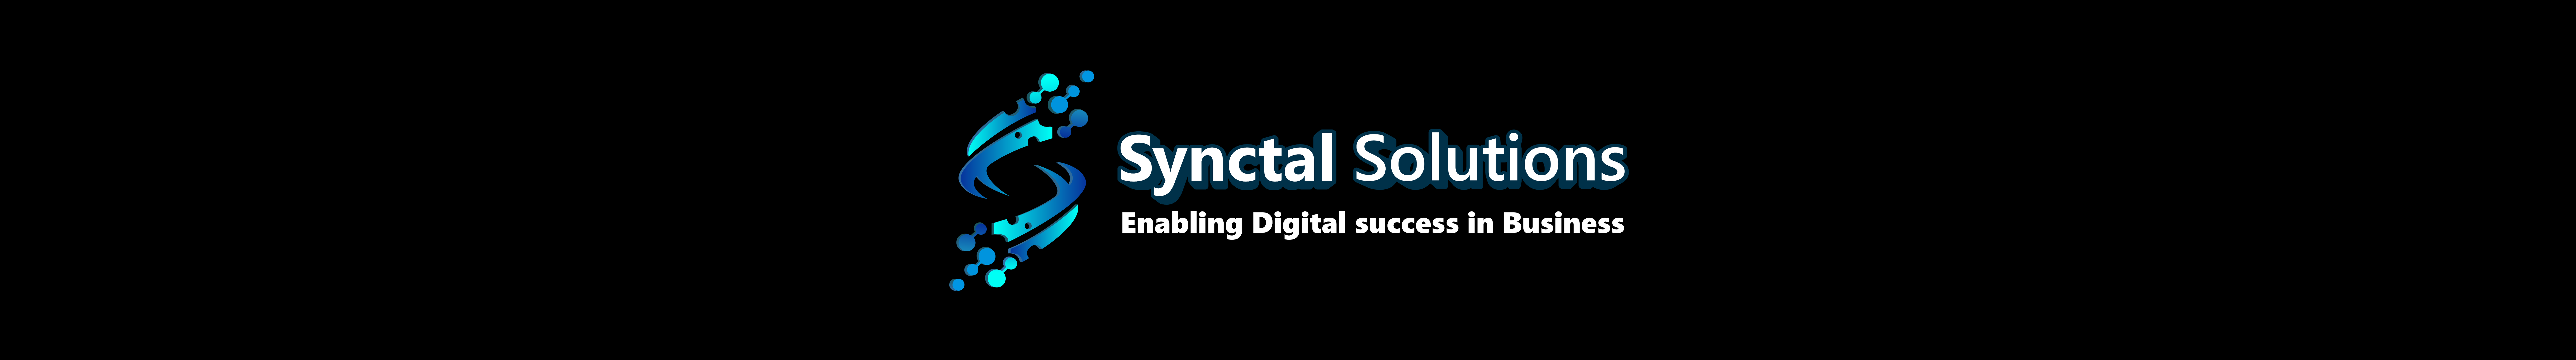 Banner de perfil de Synctal Solutions